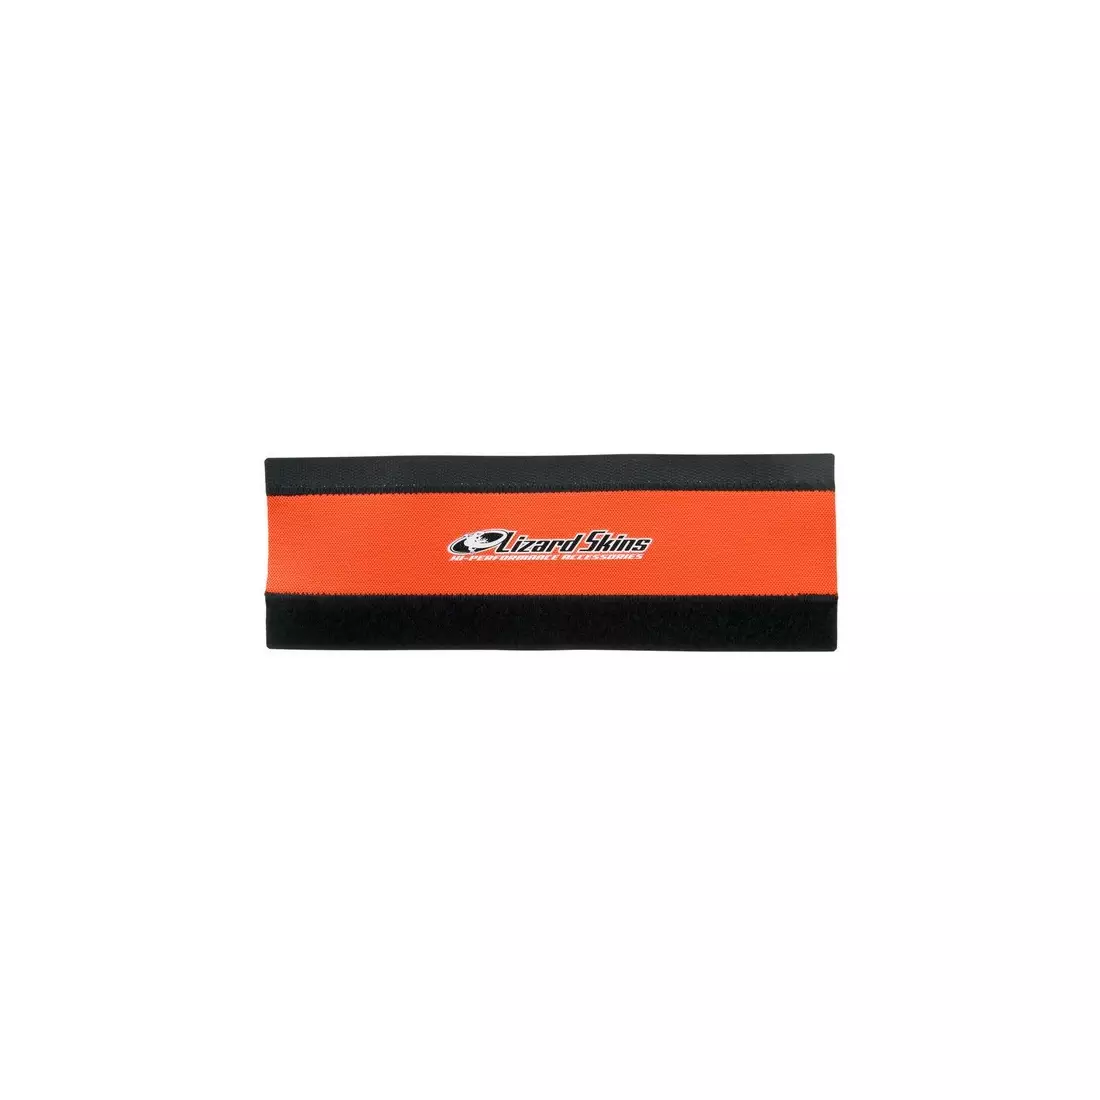 LIZARDSKINS Fahrradrahmen-Abdeckung jumbo (m) orange LZS-CHJDS900